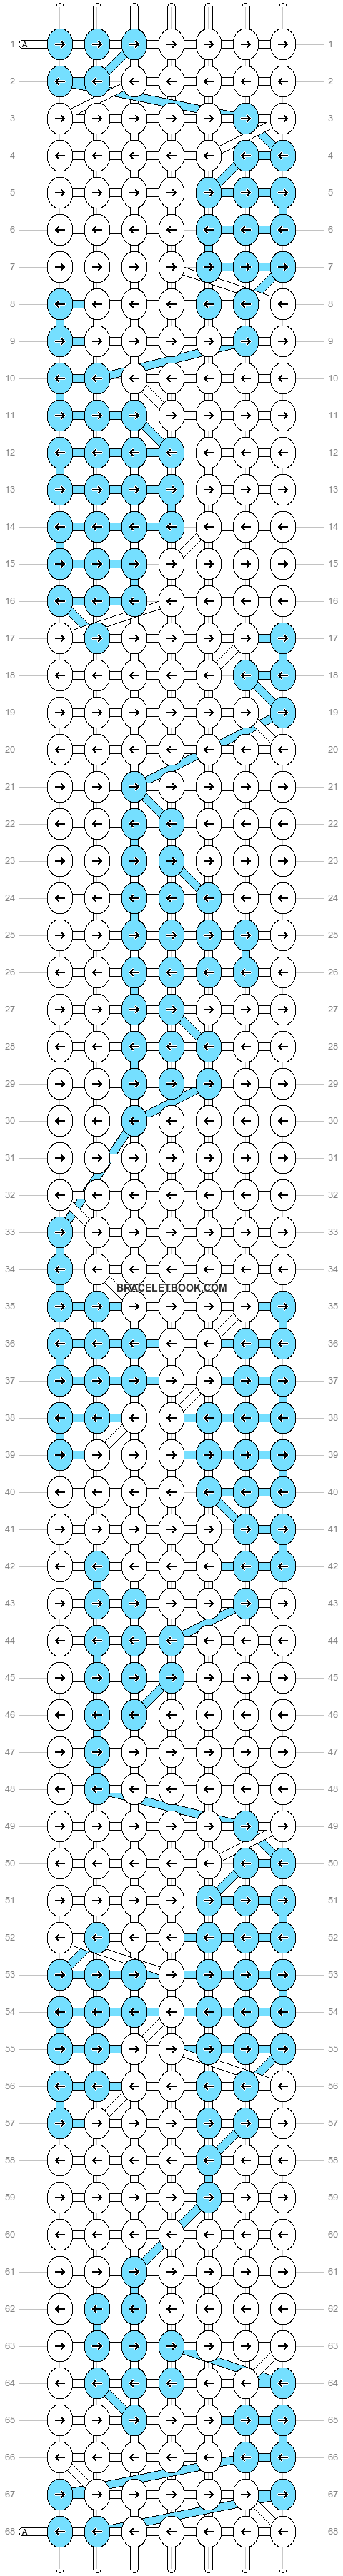 Alpha pattern #1654 variation #11967 pattern